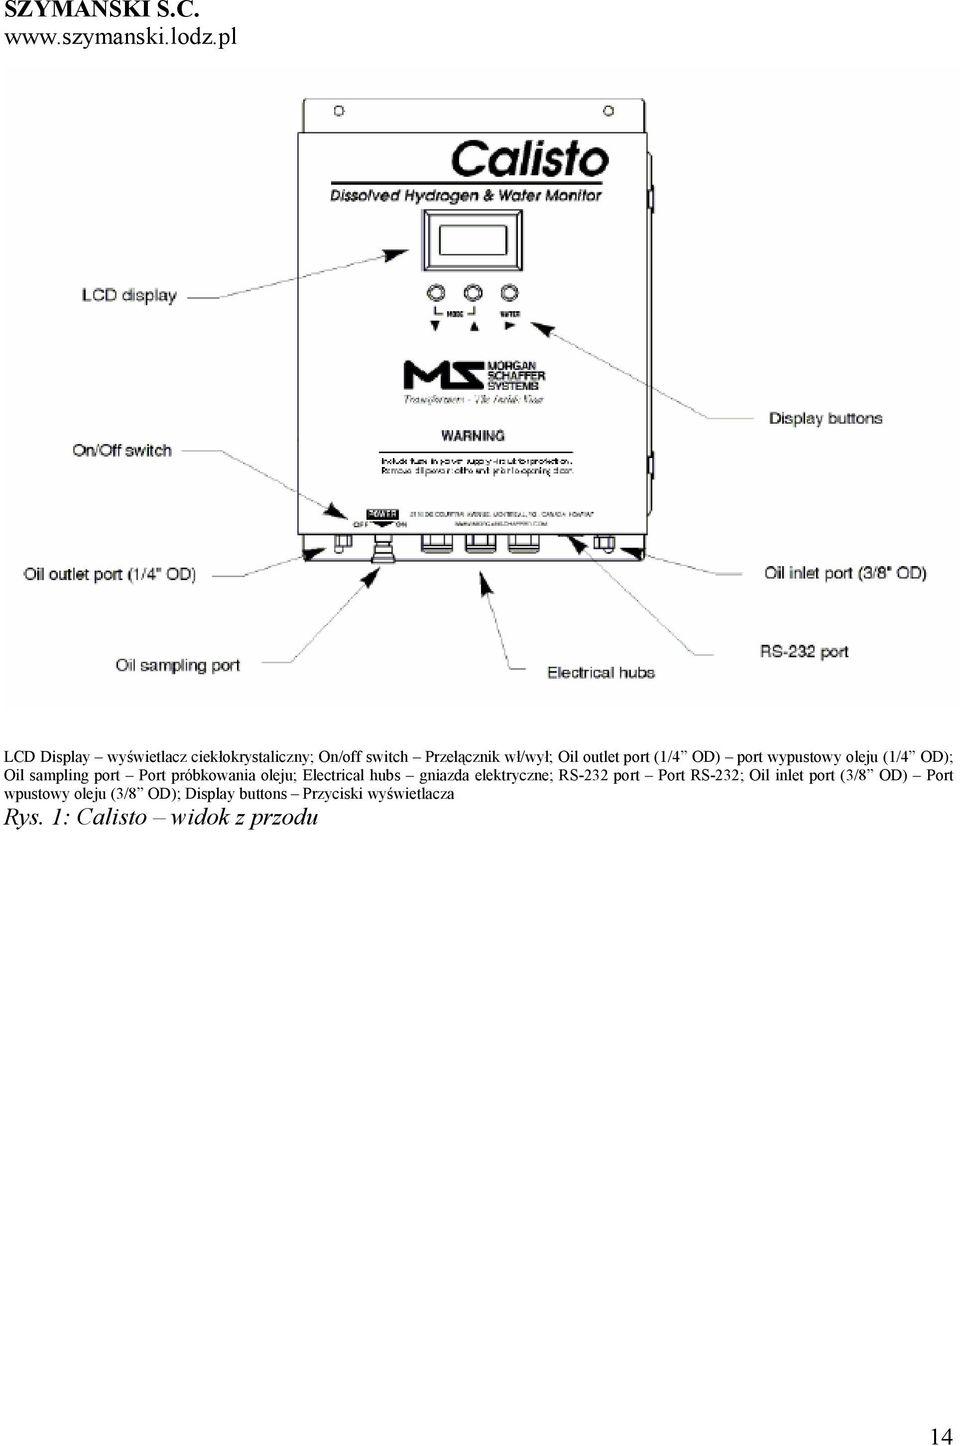 Electrical hubs gniazda elektryczne; RS-232 port Port RS-232; Oil inlet port (3/8 OD) Port